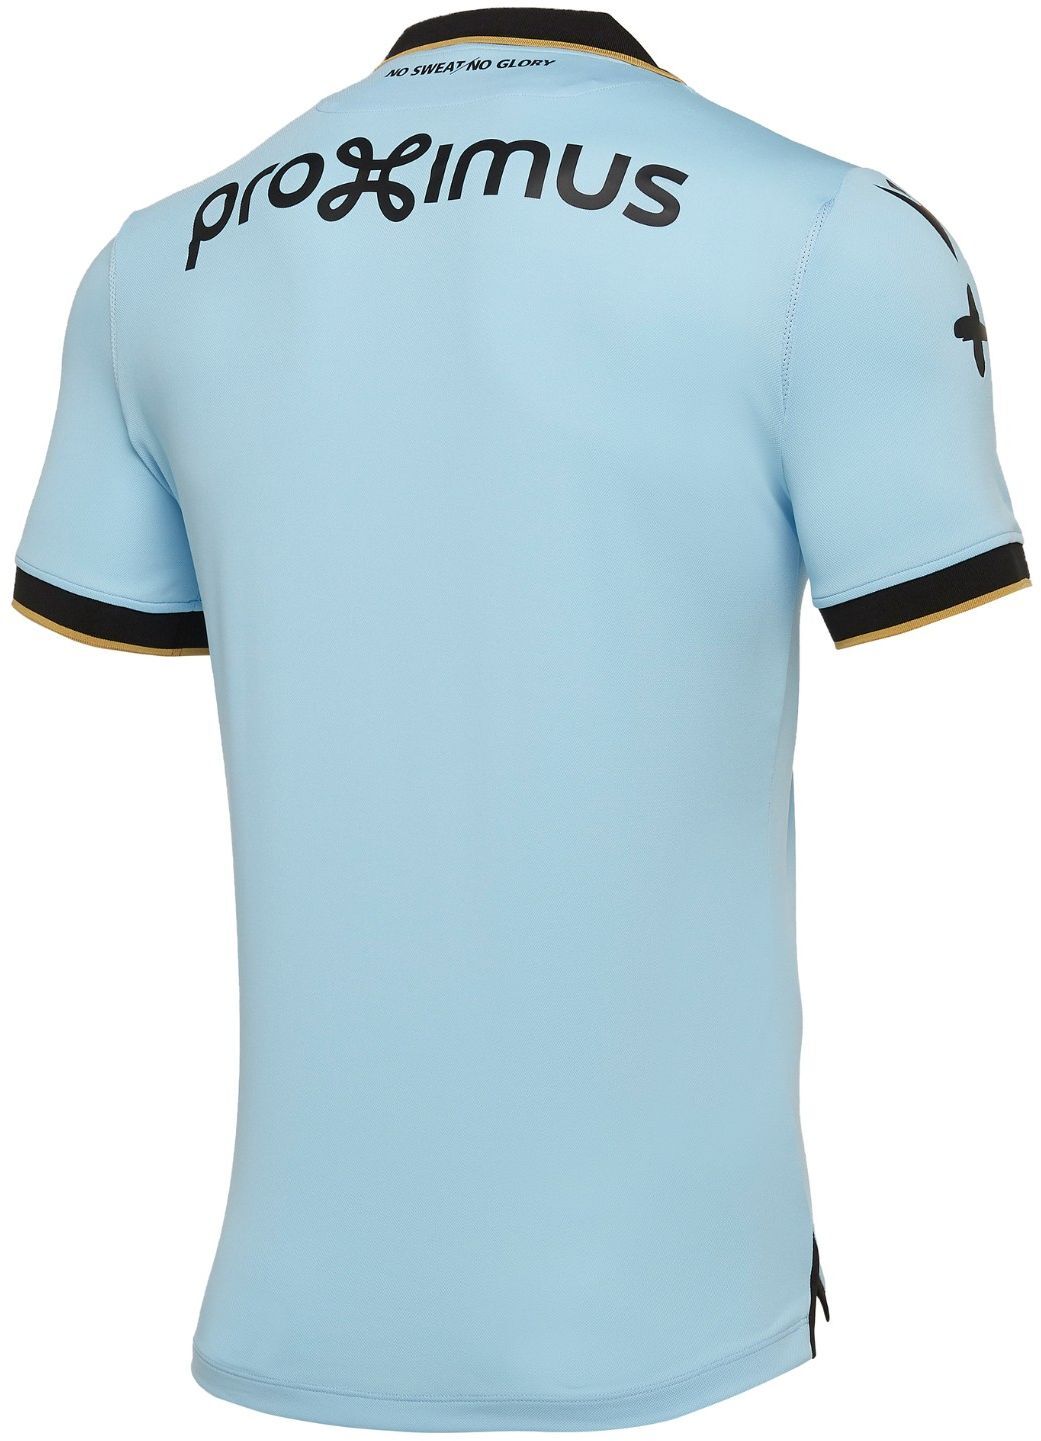 Club Brugge derde shirt seizoen 2019/2020